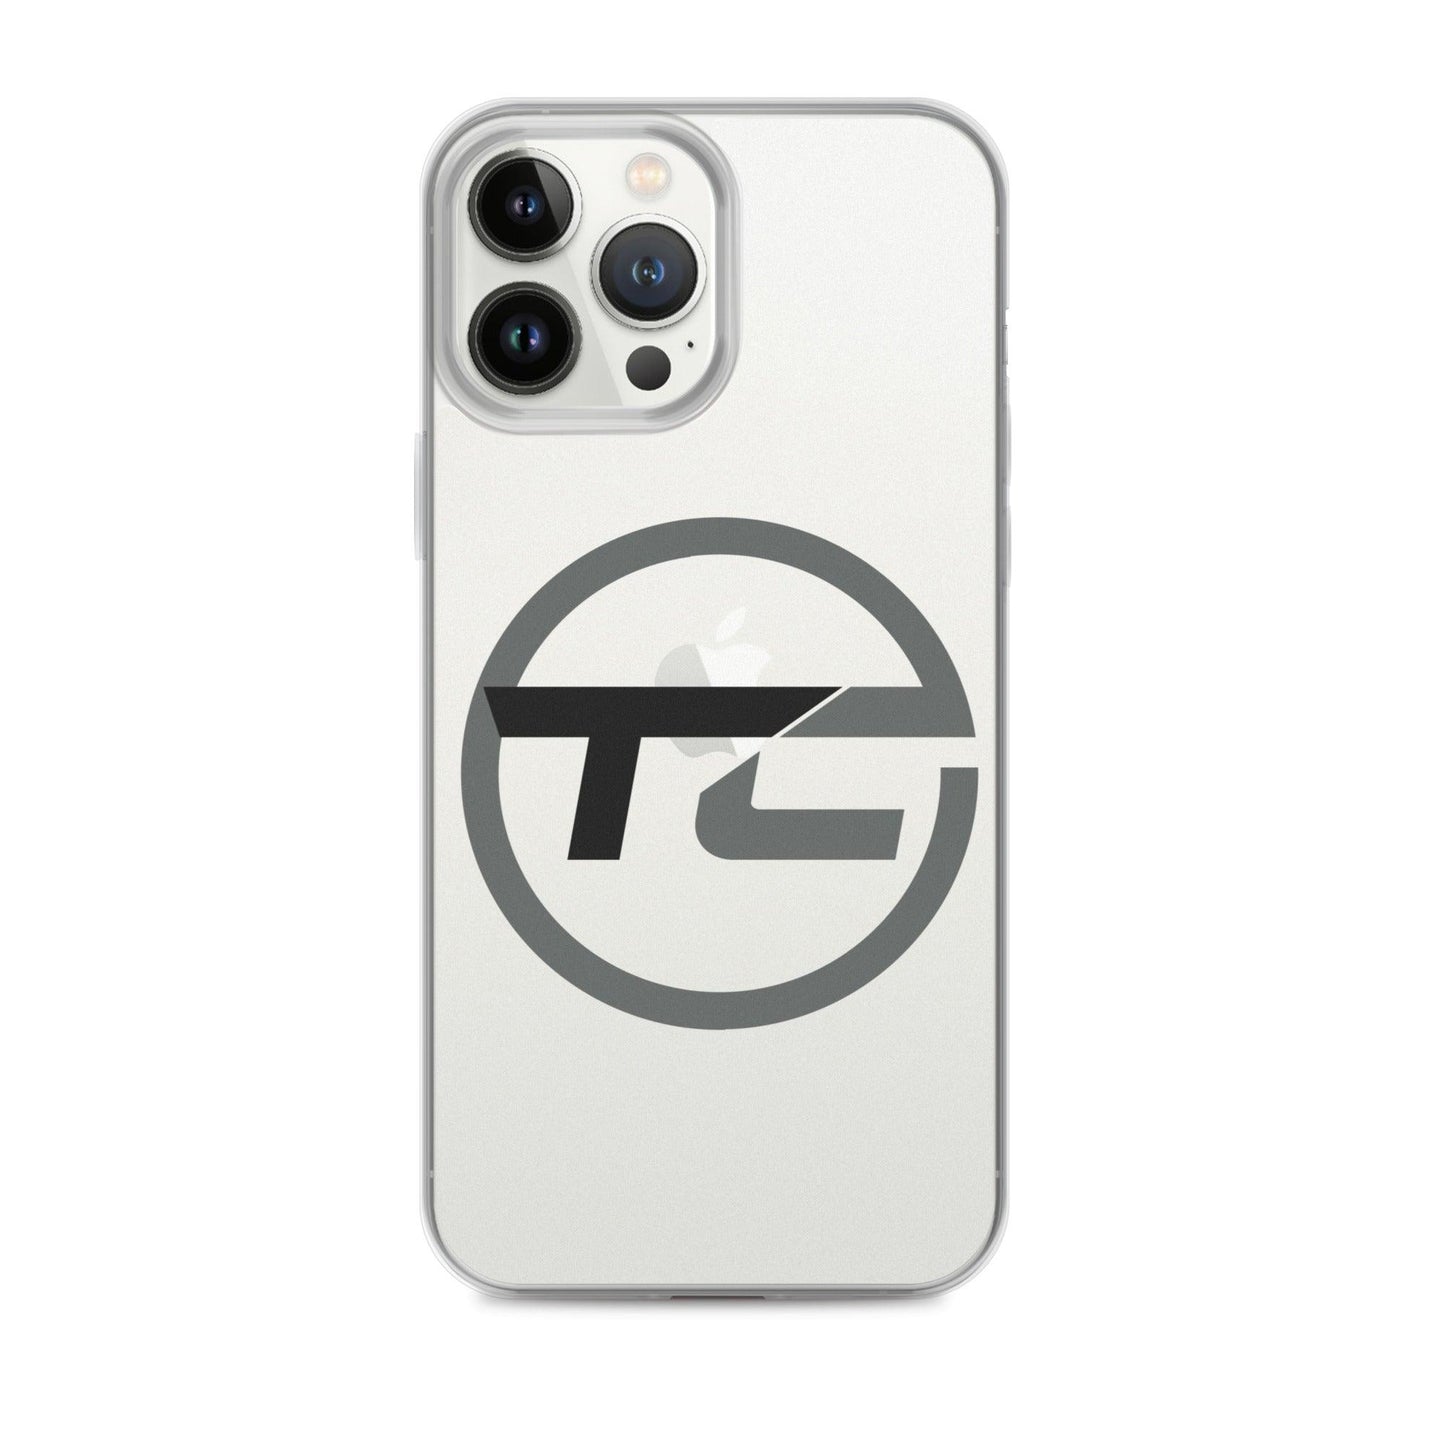 Trey Cabbage “TC” iPhone Case - Fan Arch